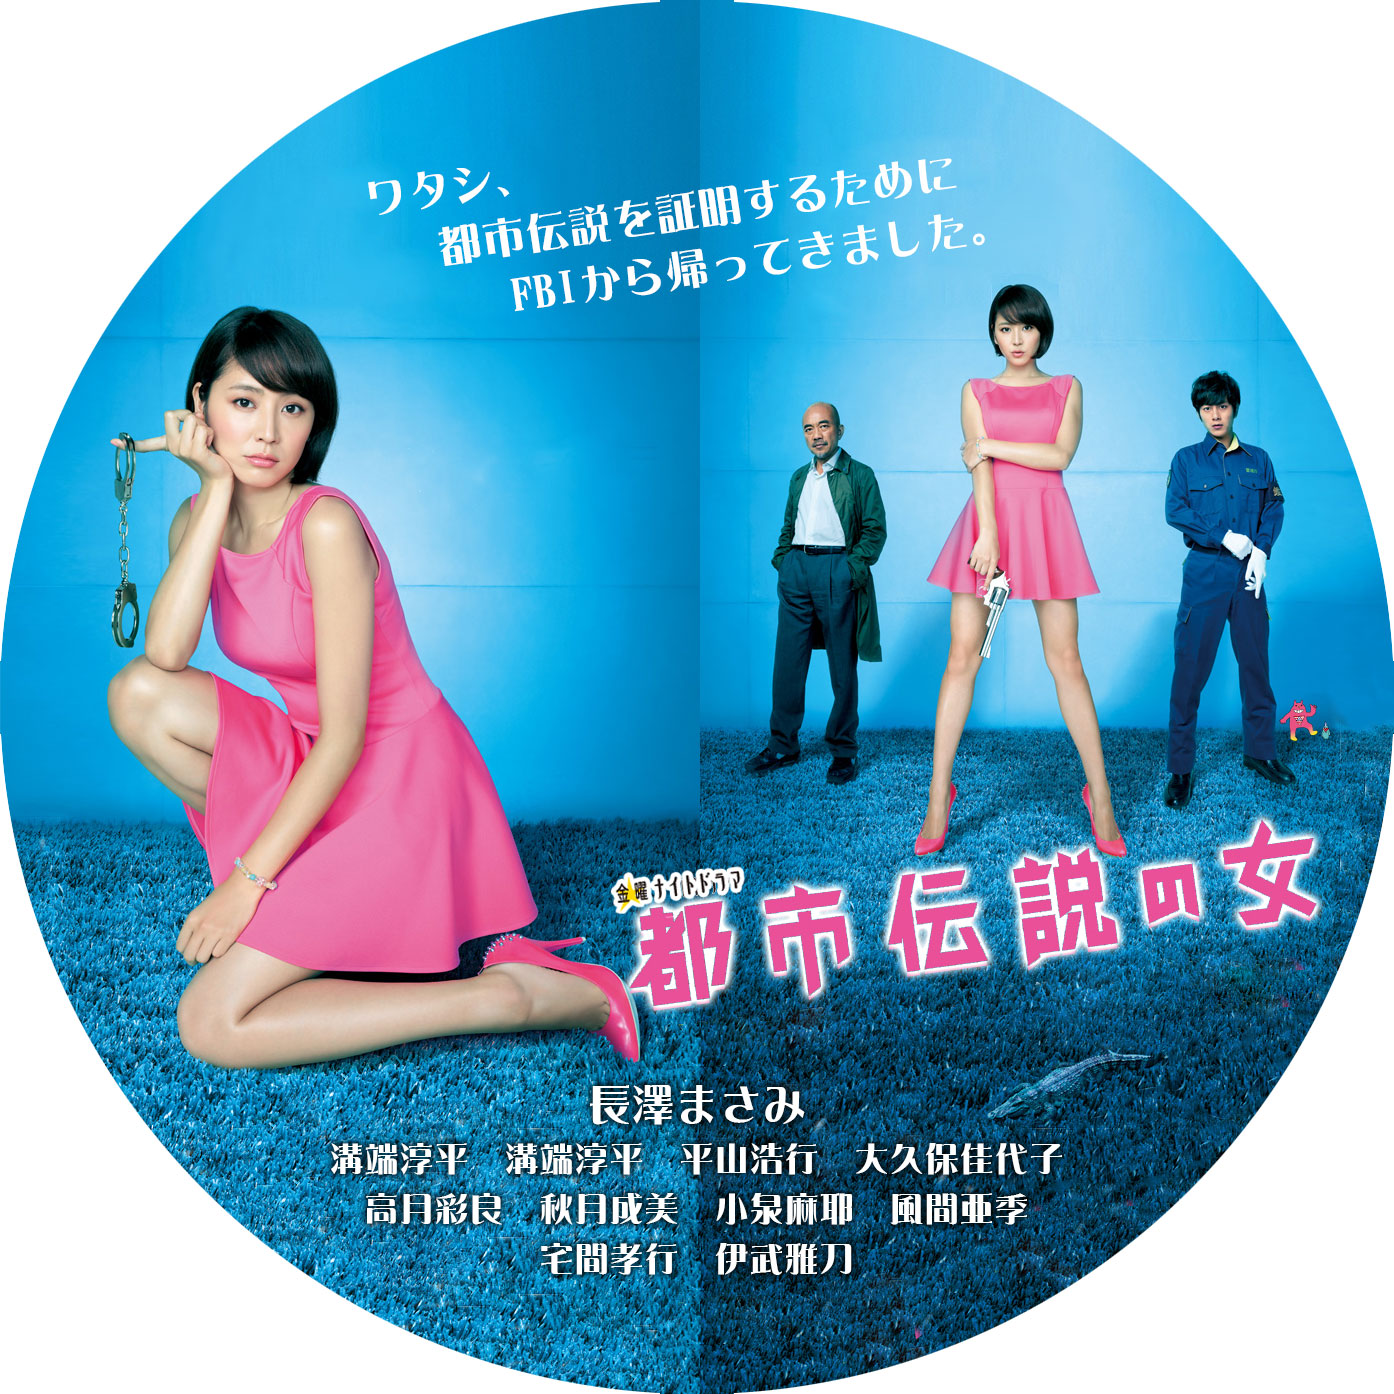 都市伝説の女 PART2 [Blu-ray] BOX - 日本映画